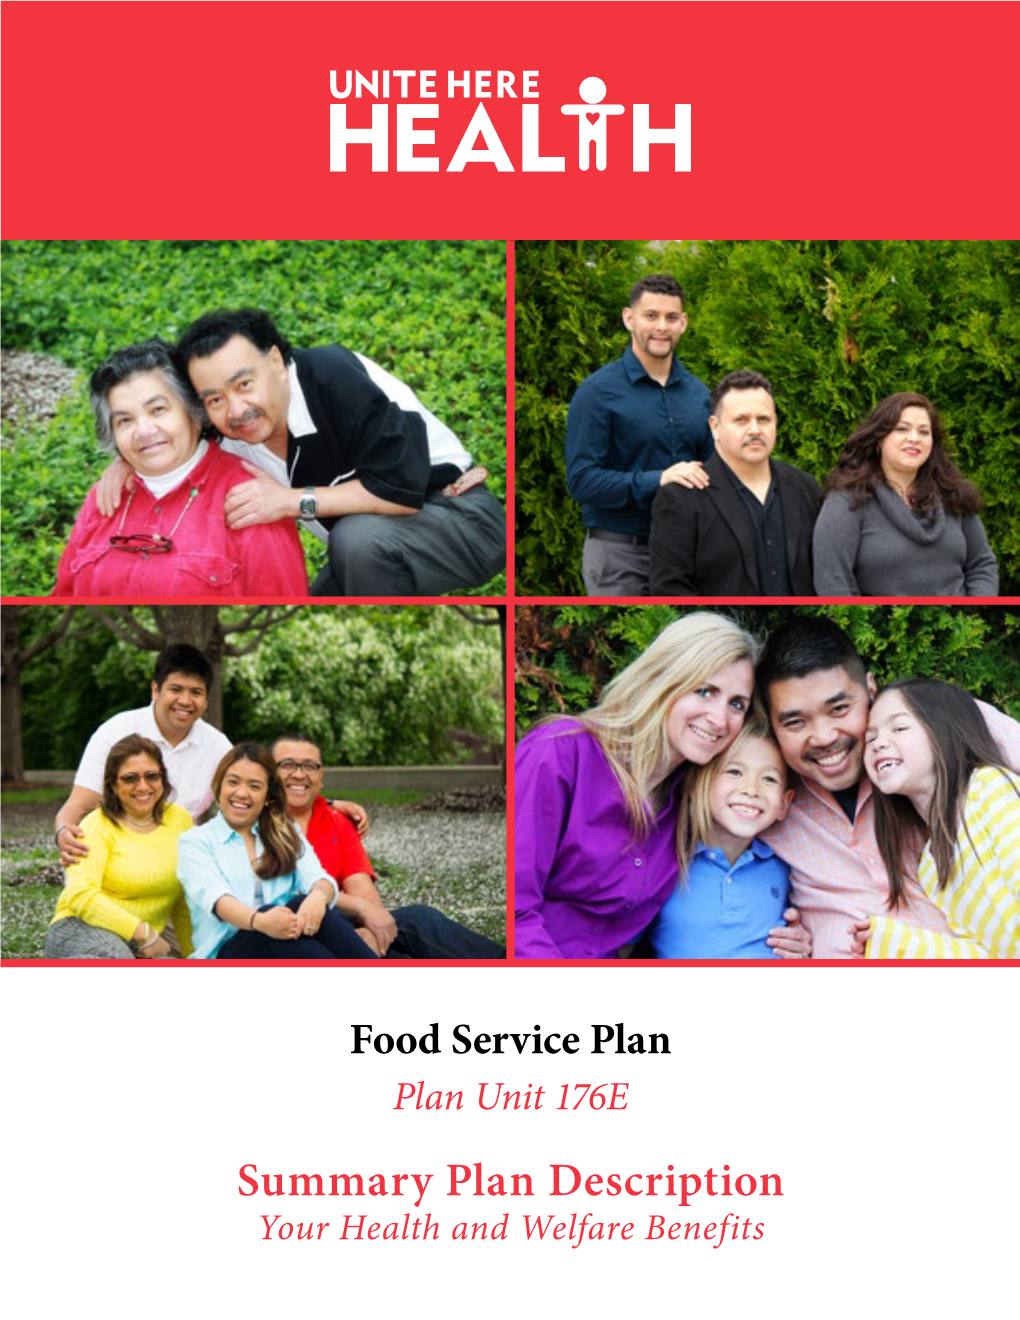 Summary Plan Description Your Health and Welfare Benefits